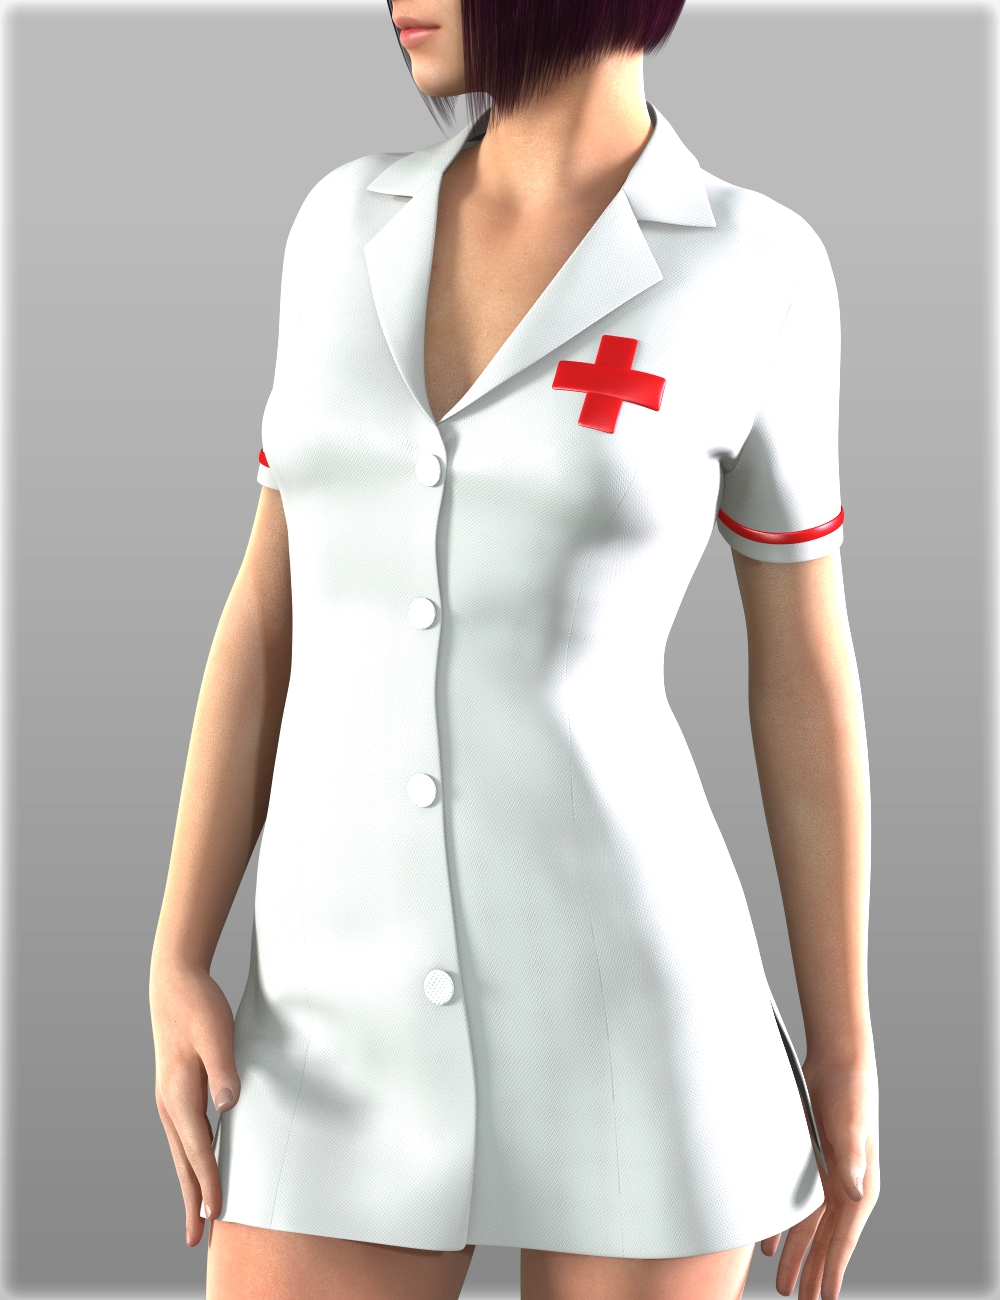 Sexy Nurse Uniform for Genesis 2 Female(s) by: IH Kang, 3D Models by Daz 3D